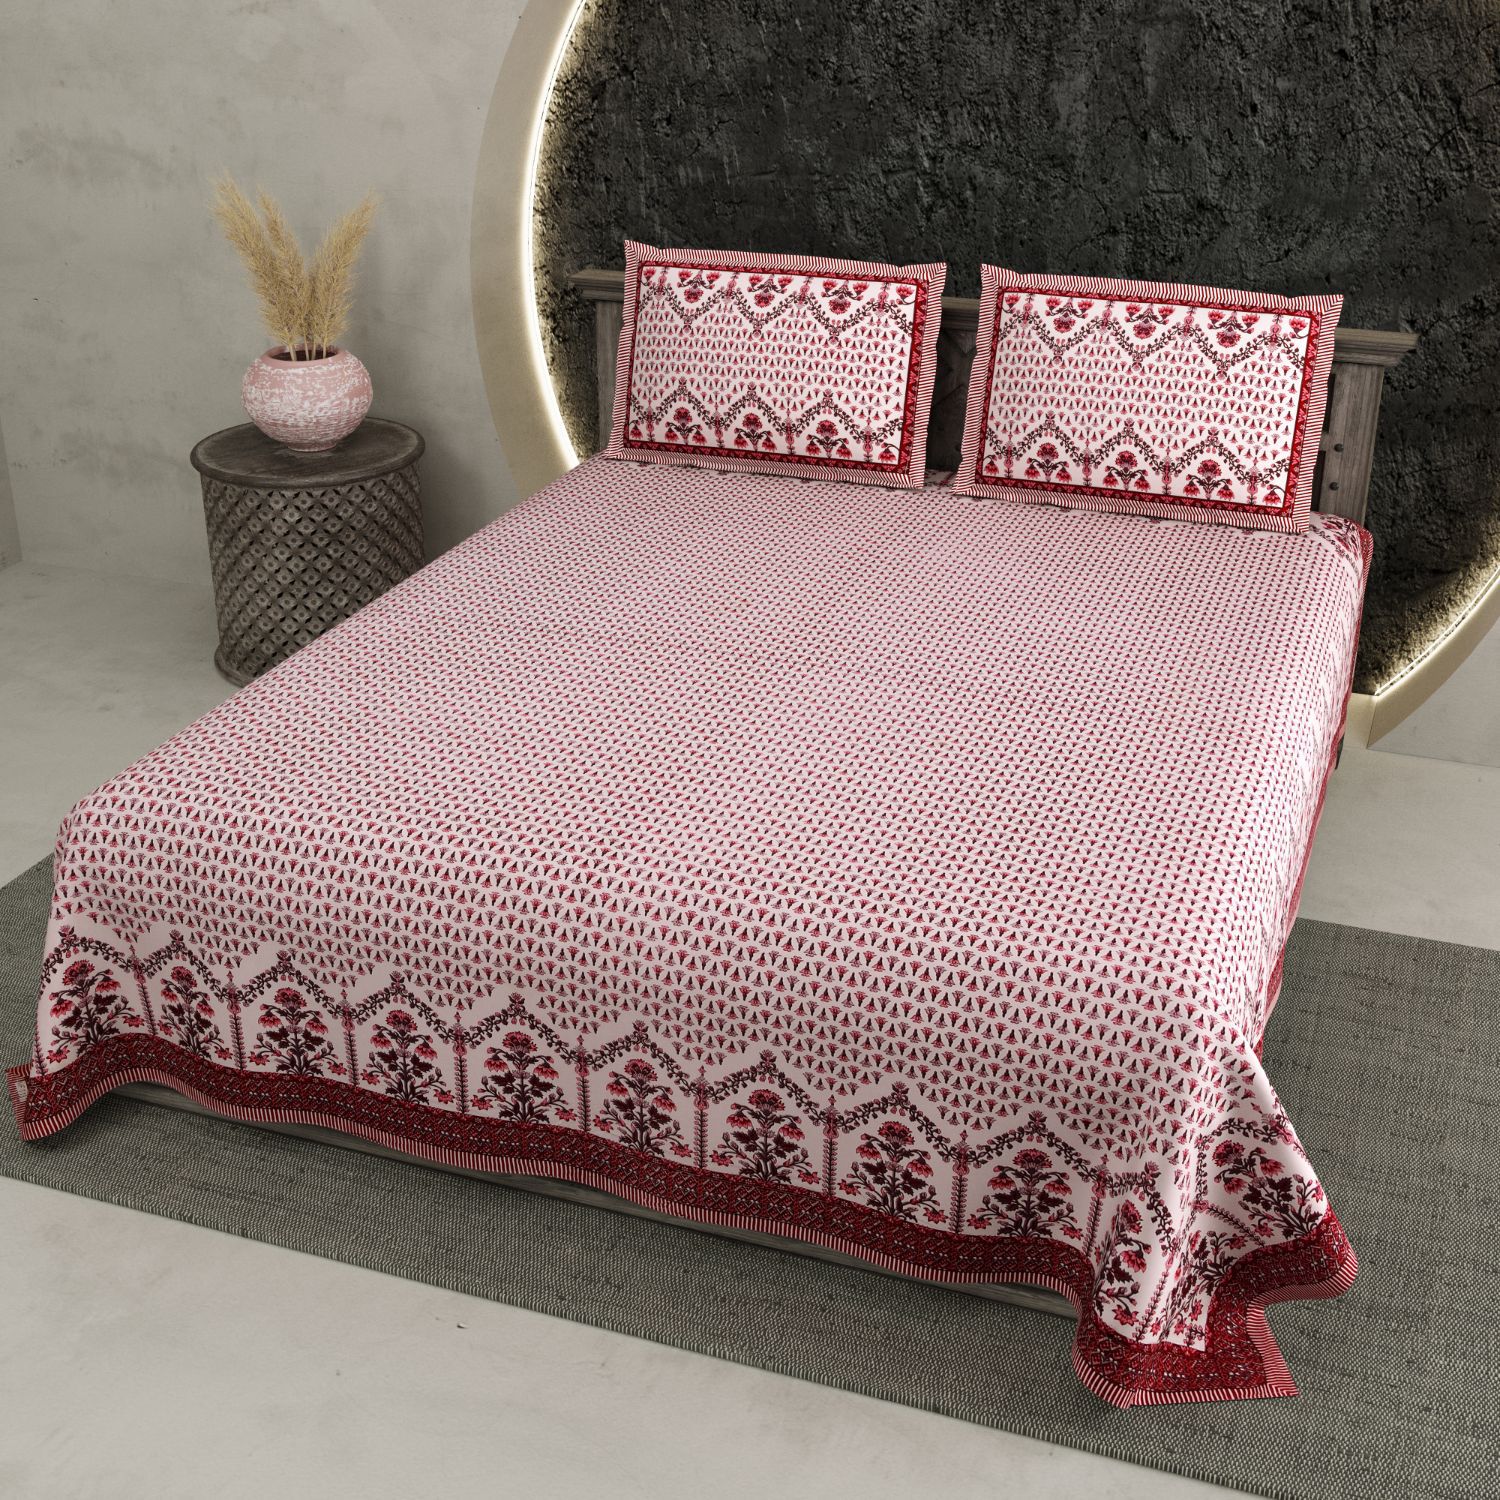     			UniqueChoice Cotton Floral Printed Double Bedsheet with 2 Pillow Covers - Multicolor